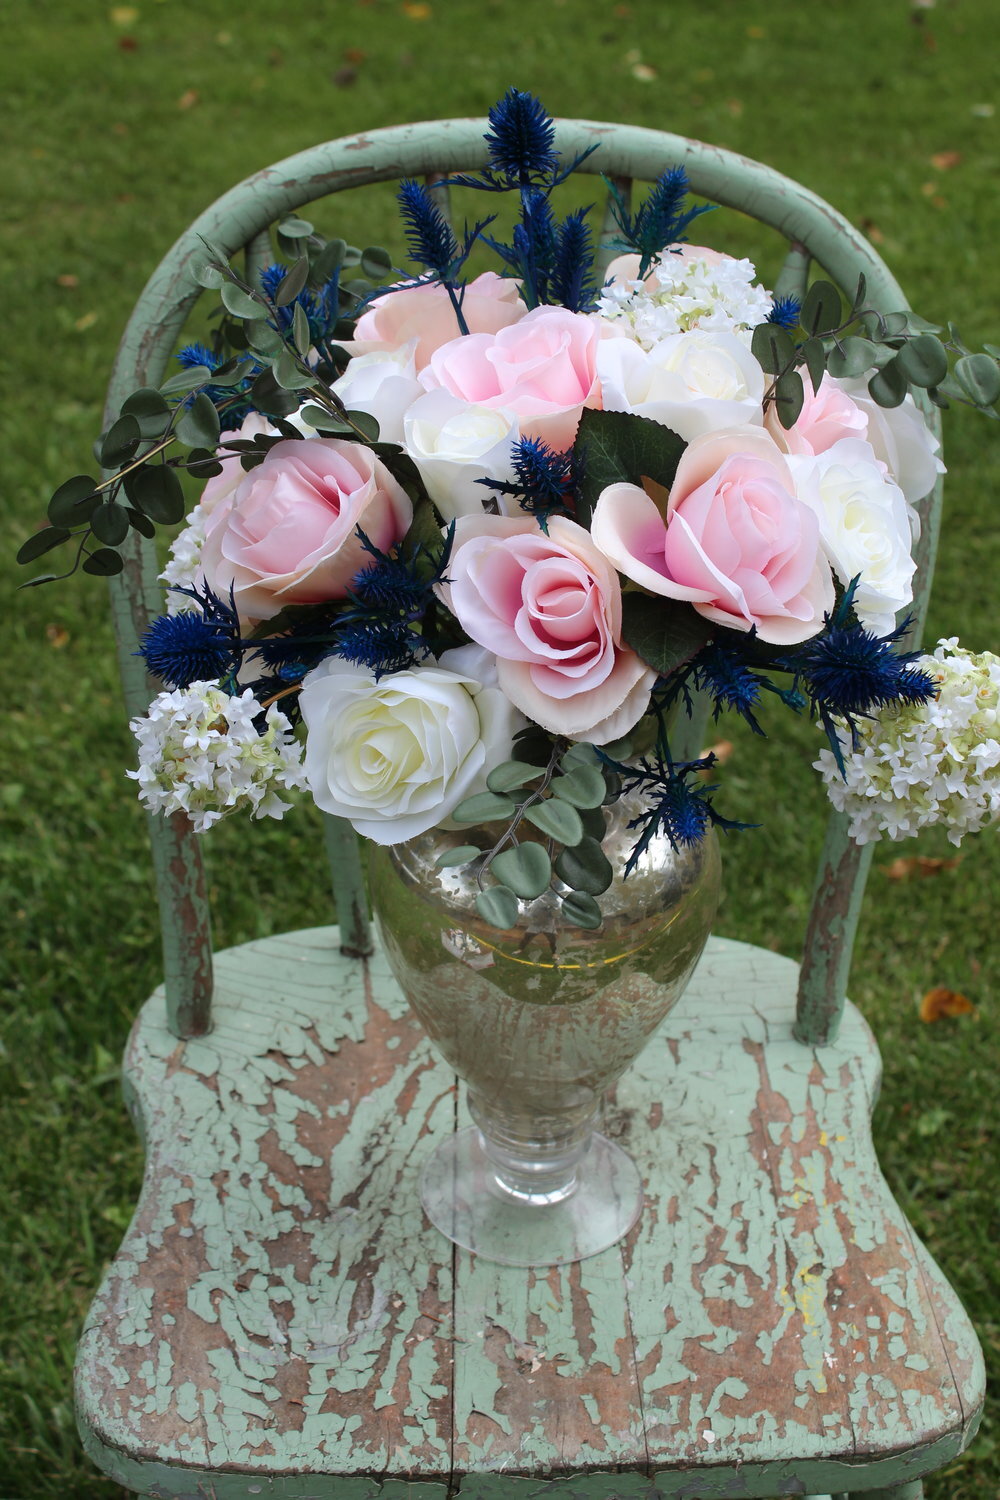 minneapolis-wedding-centerpiece-silk-flower-arrangement-1.jpg